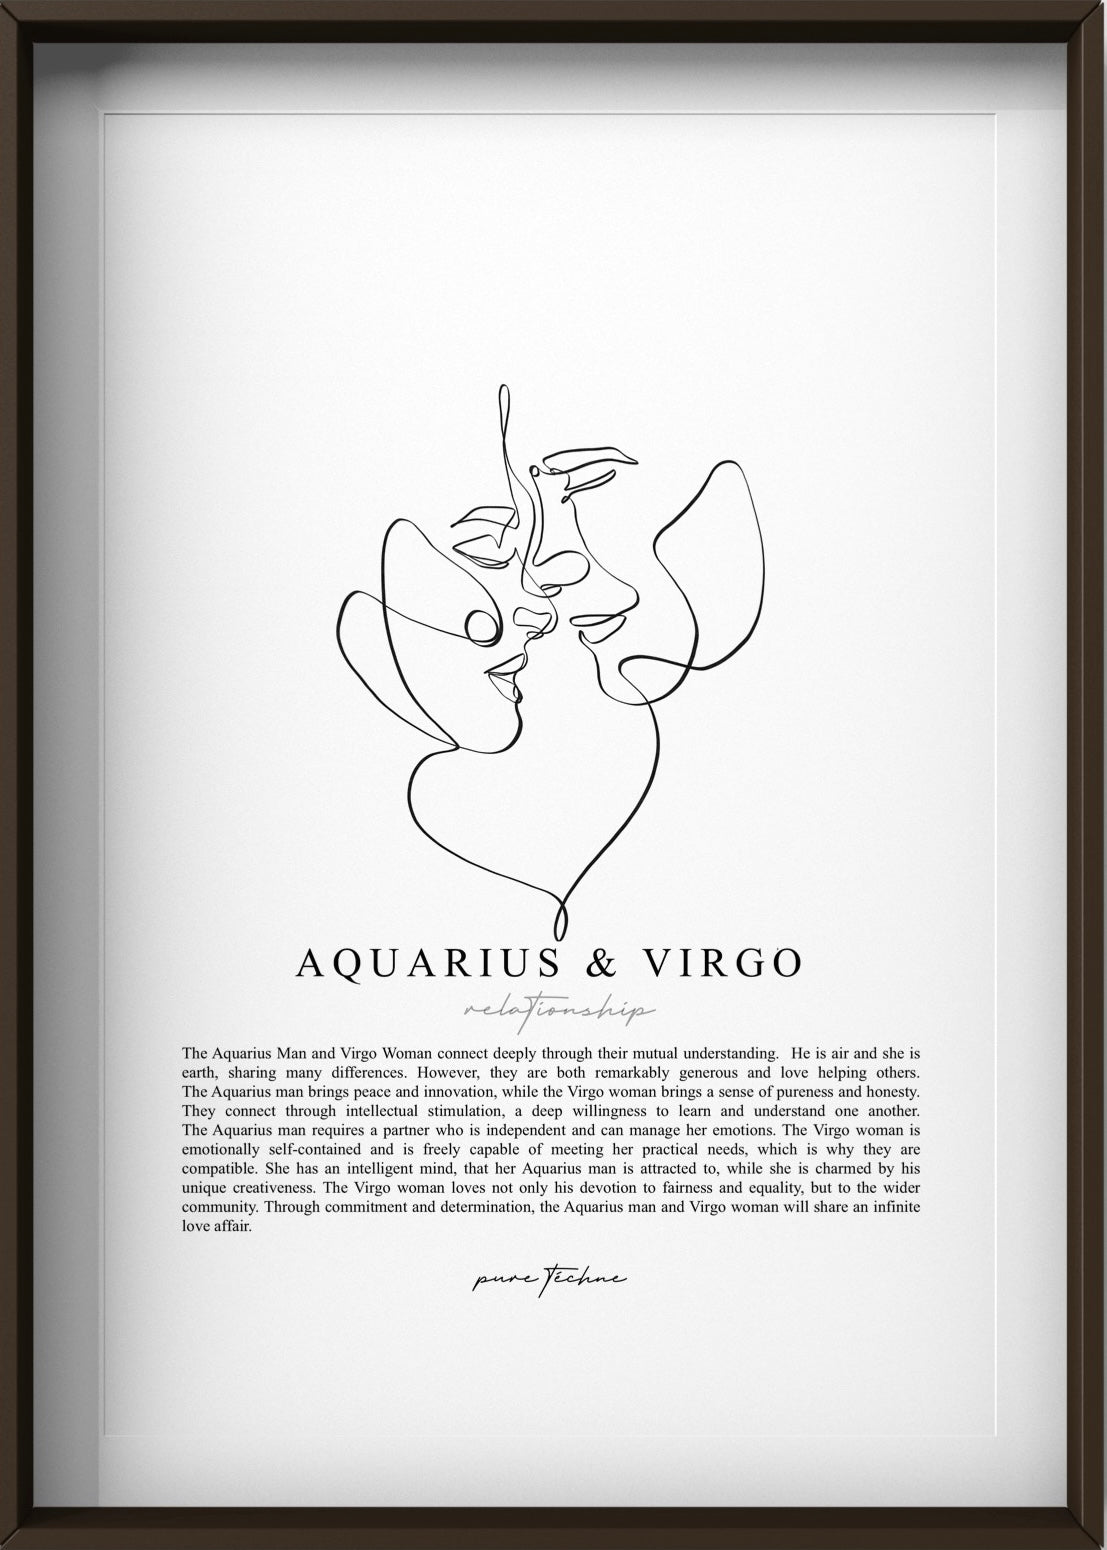 Aquarius Man & Virgo Woman